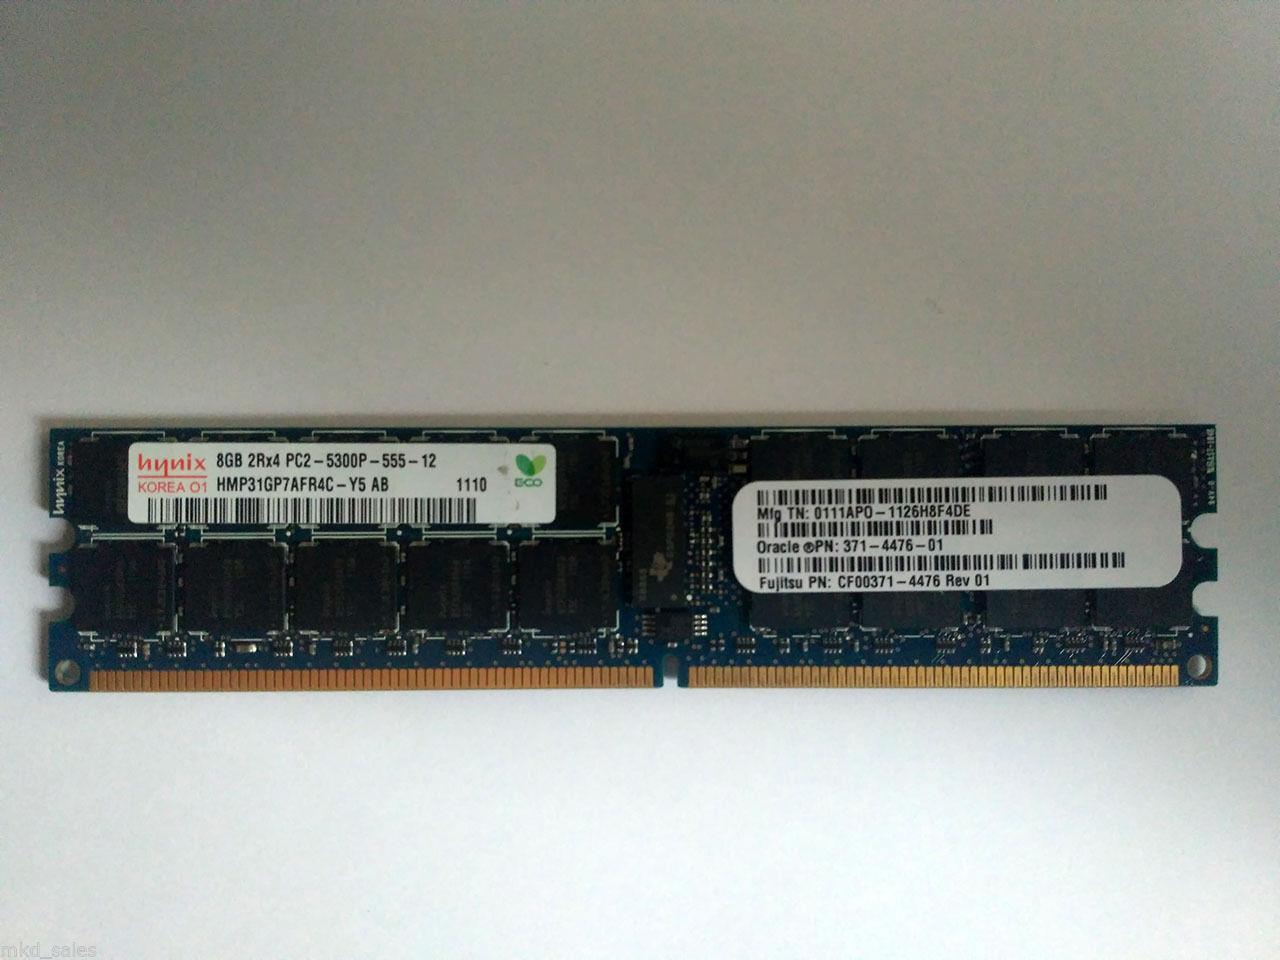 SUN ORACLE SPARC 8GB PC2-5300P DDR2-667MHz CF00371-4476 371-4476-01